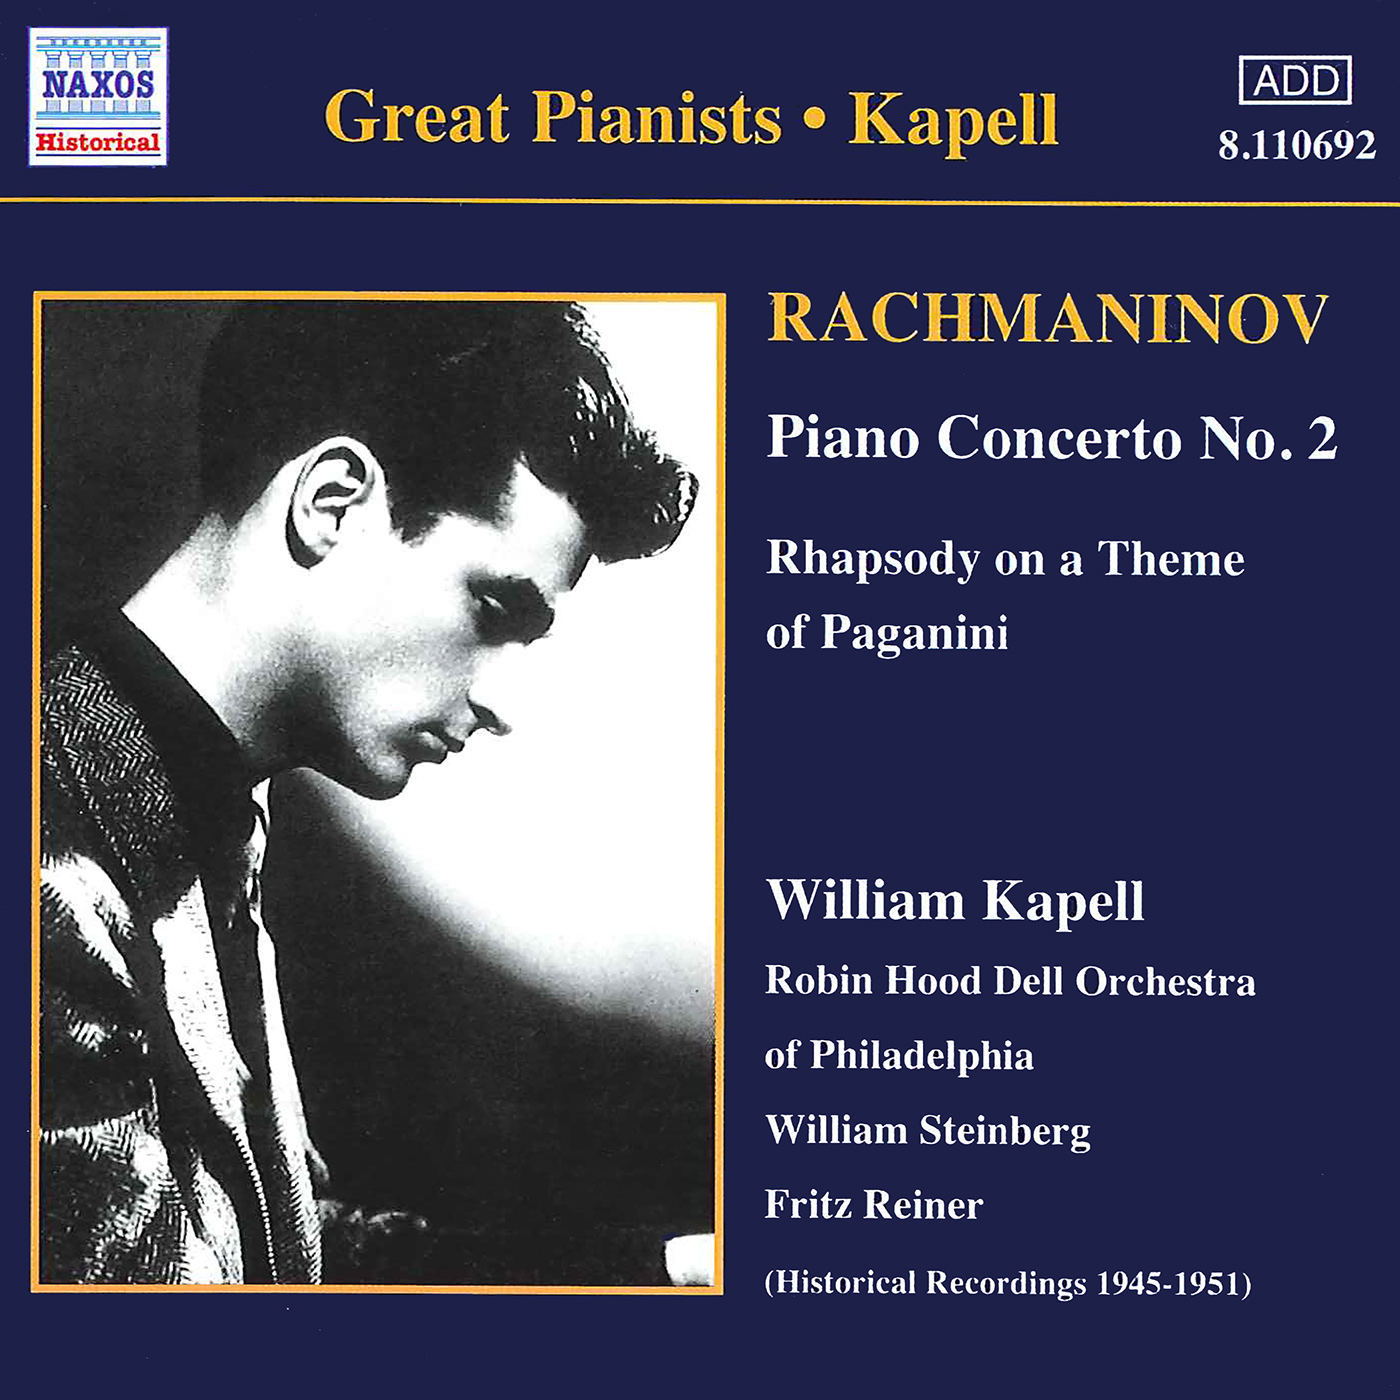 Rhapsody on a Theme of Paganini, Op. 43:Variation VI: L'istesso tempo